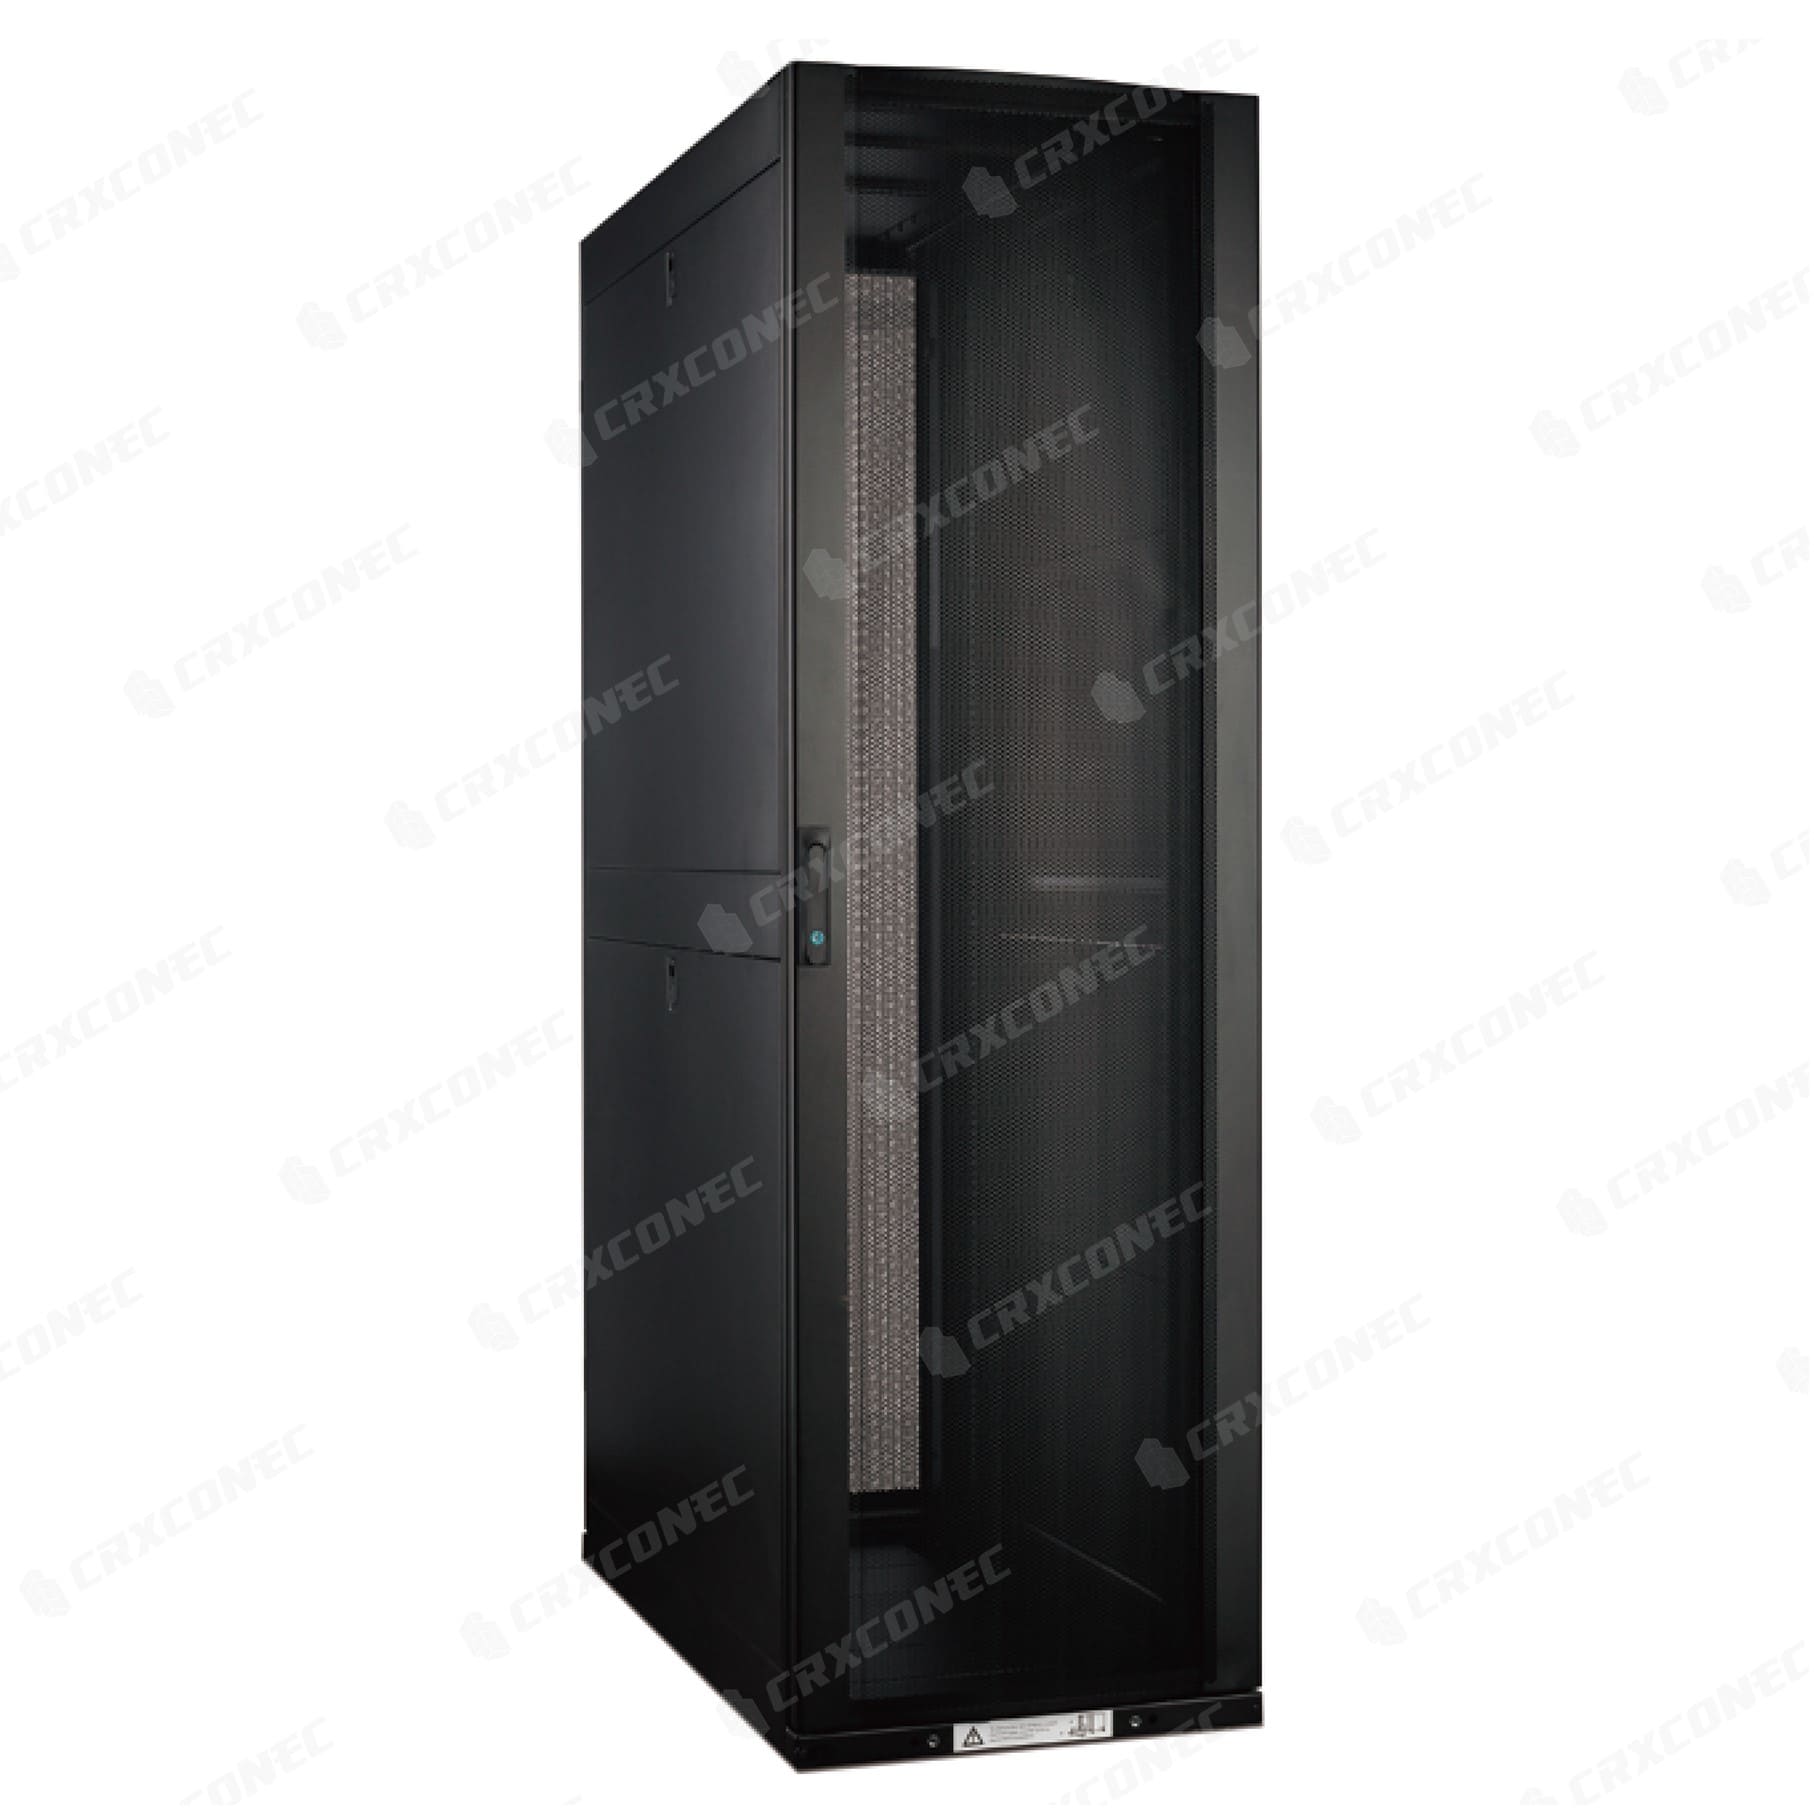 Custom Server Rack Cabinets